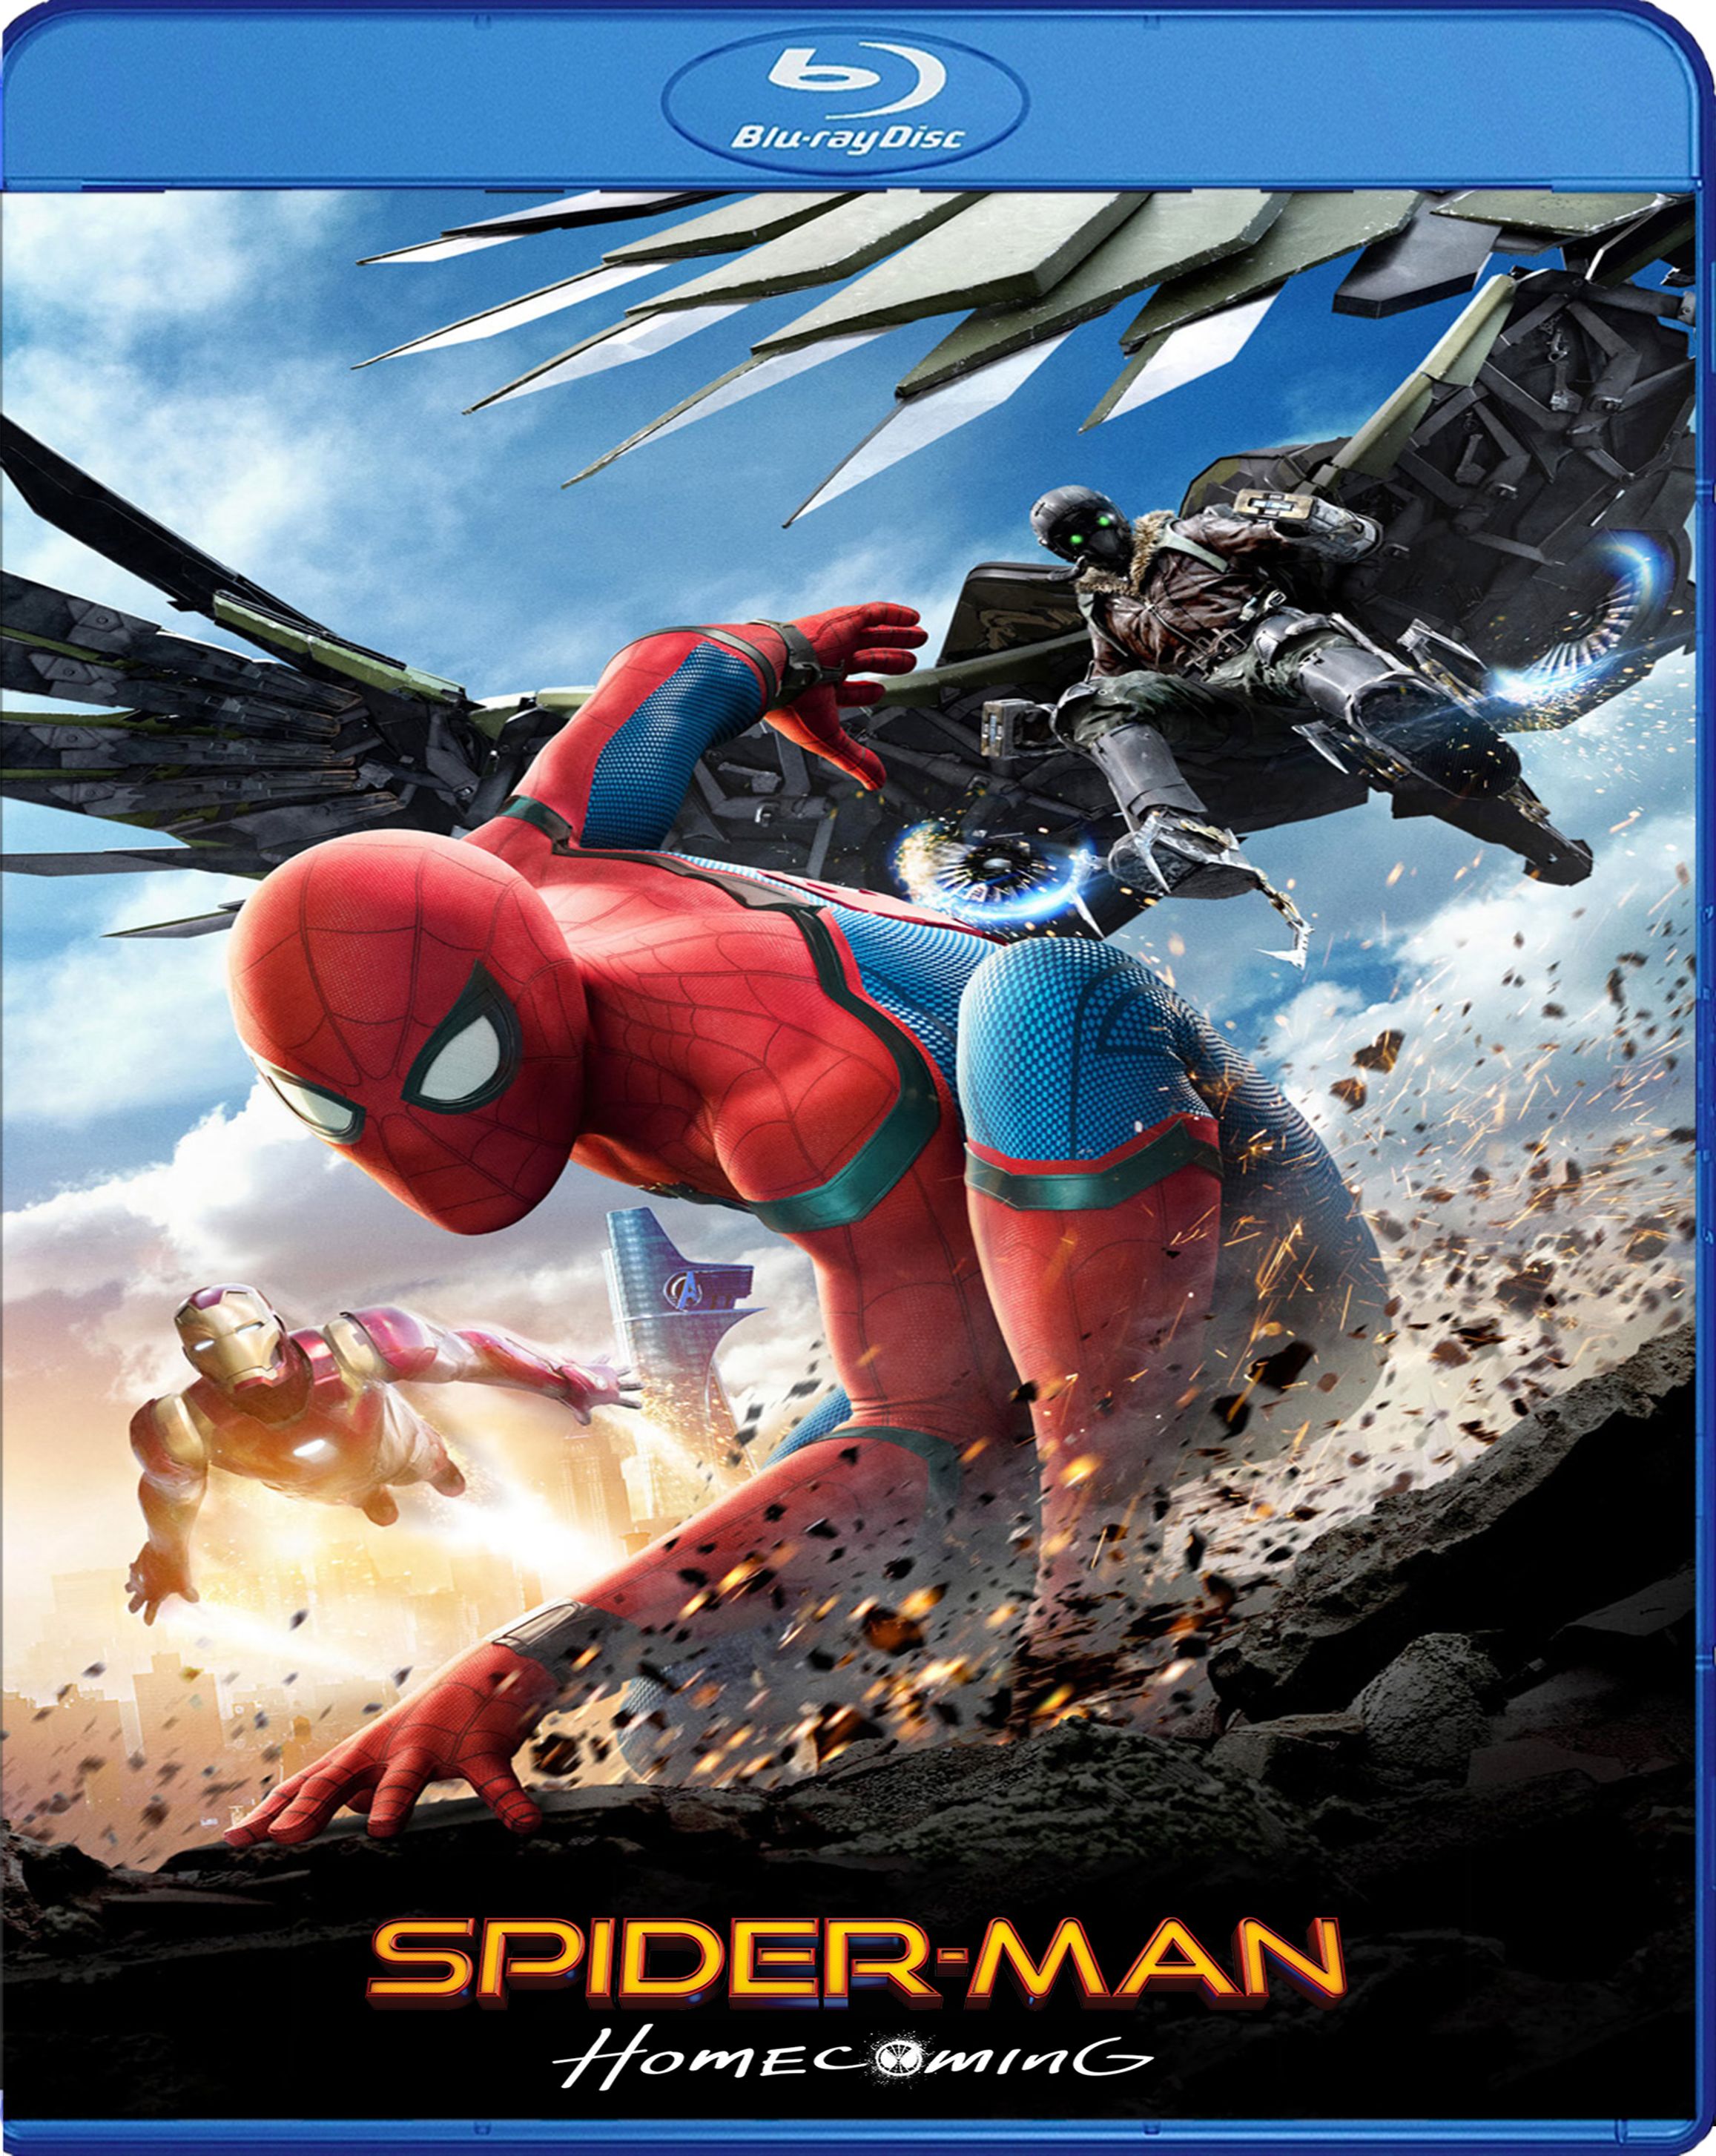 örümcek adam wallpaper,fictional character,superhero,hero,movie,technology